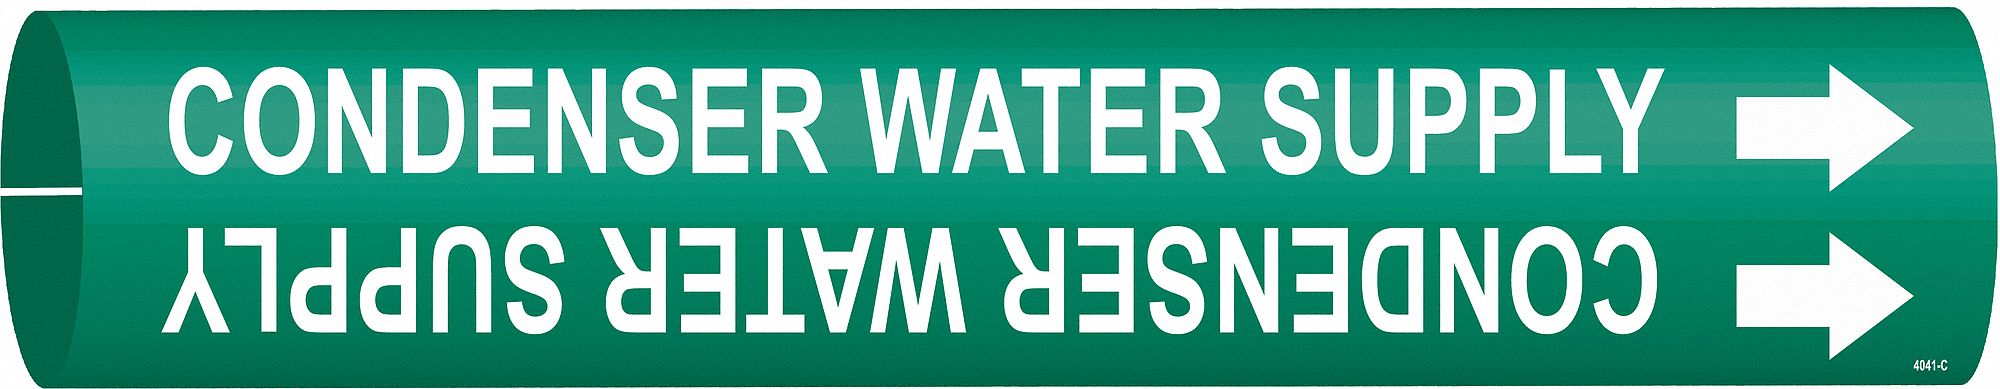 Pipe Marker,Condenser Water Supply,Green